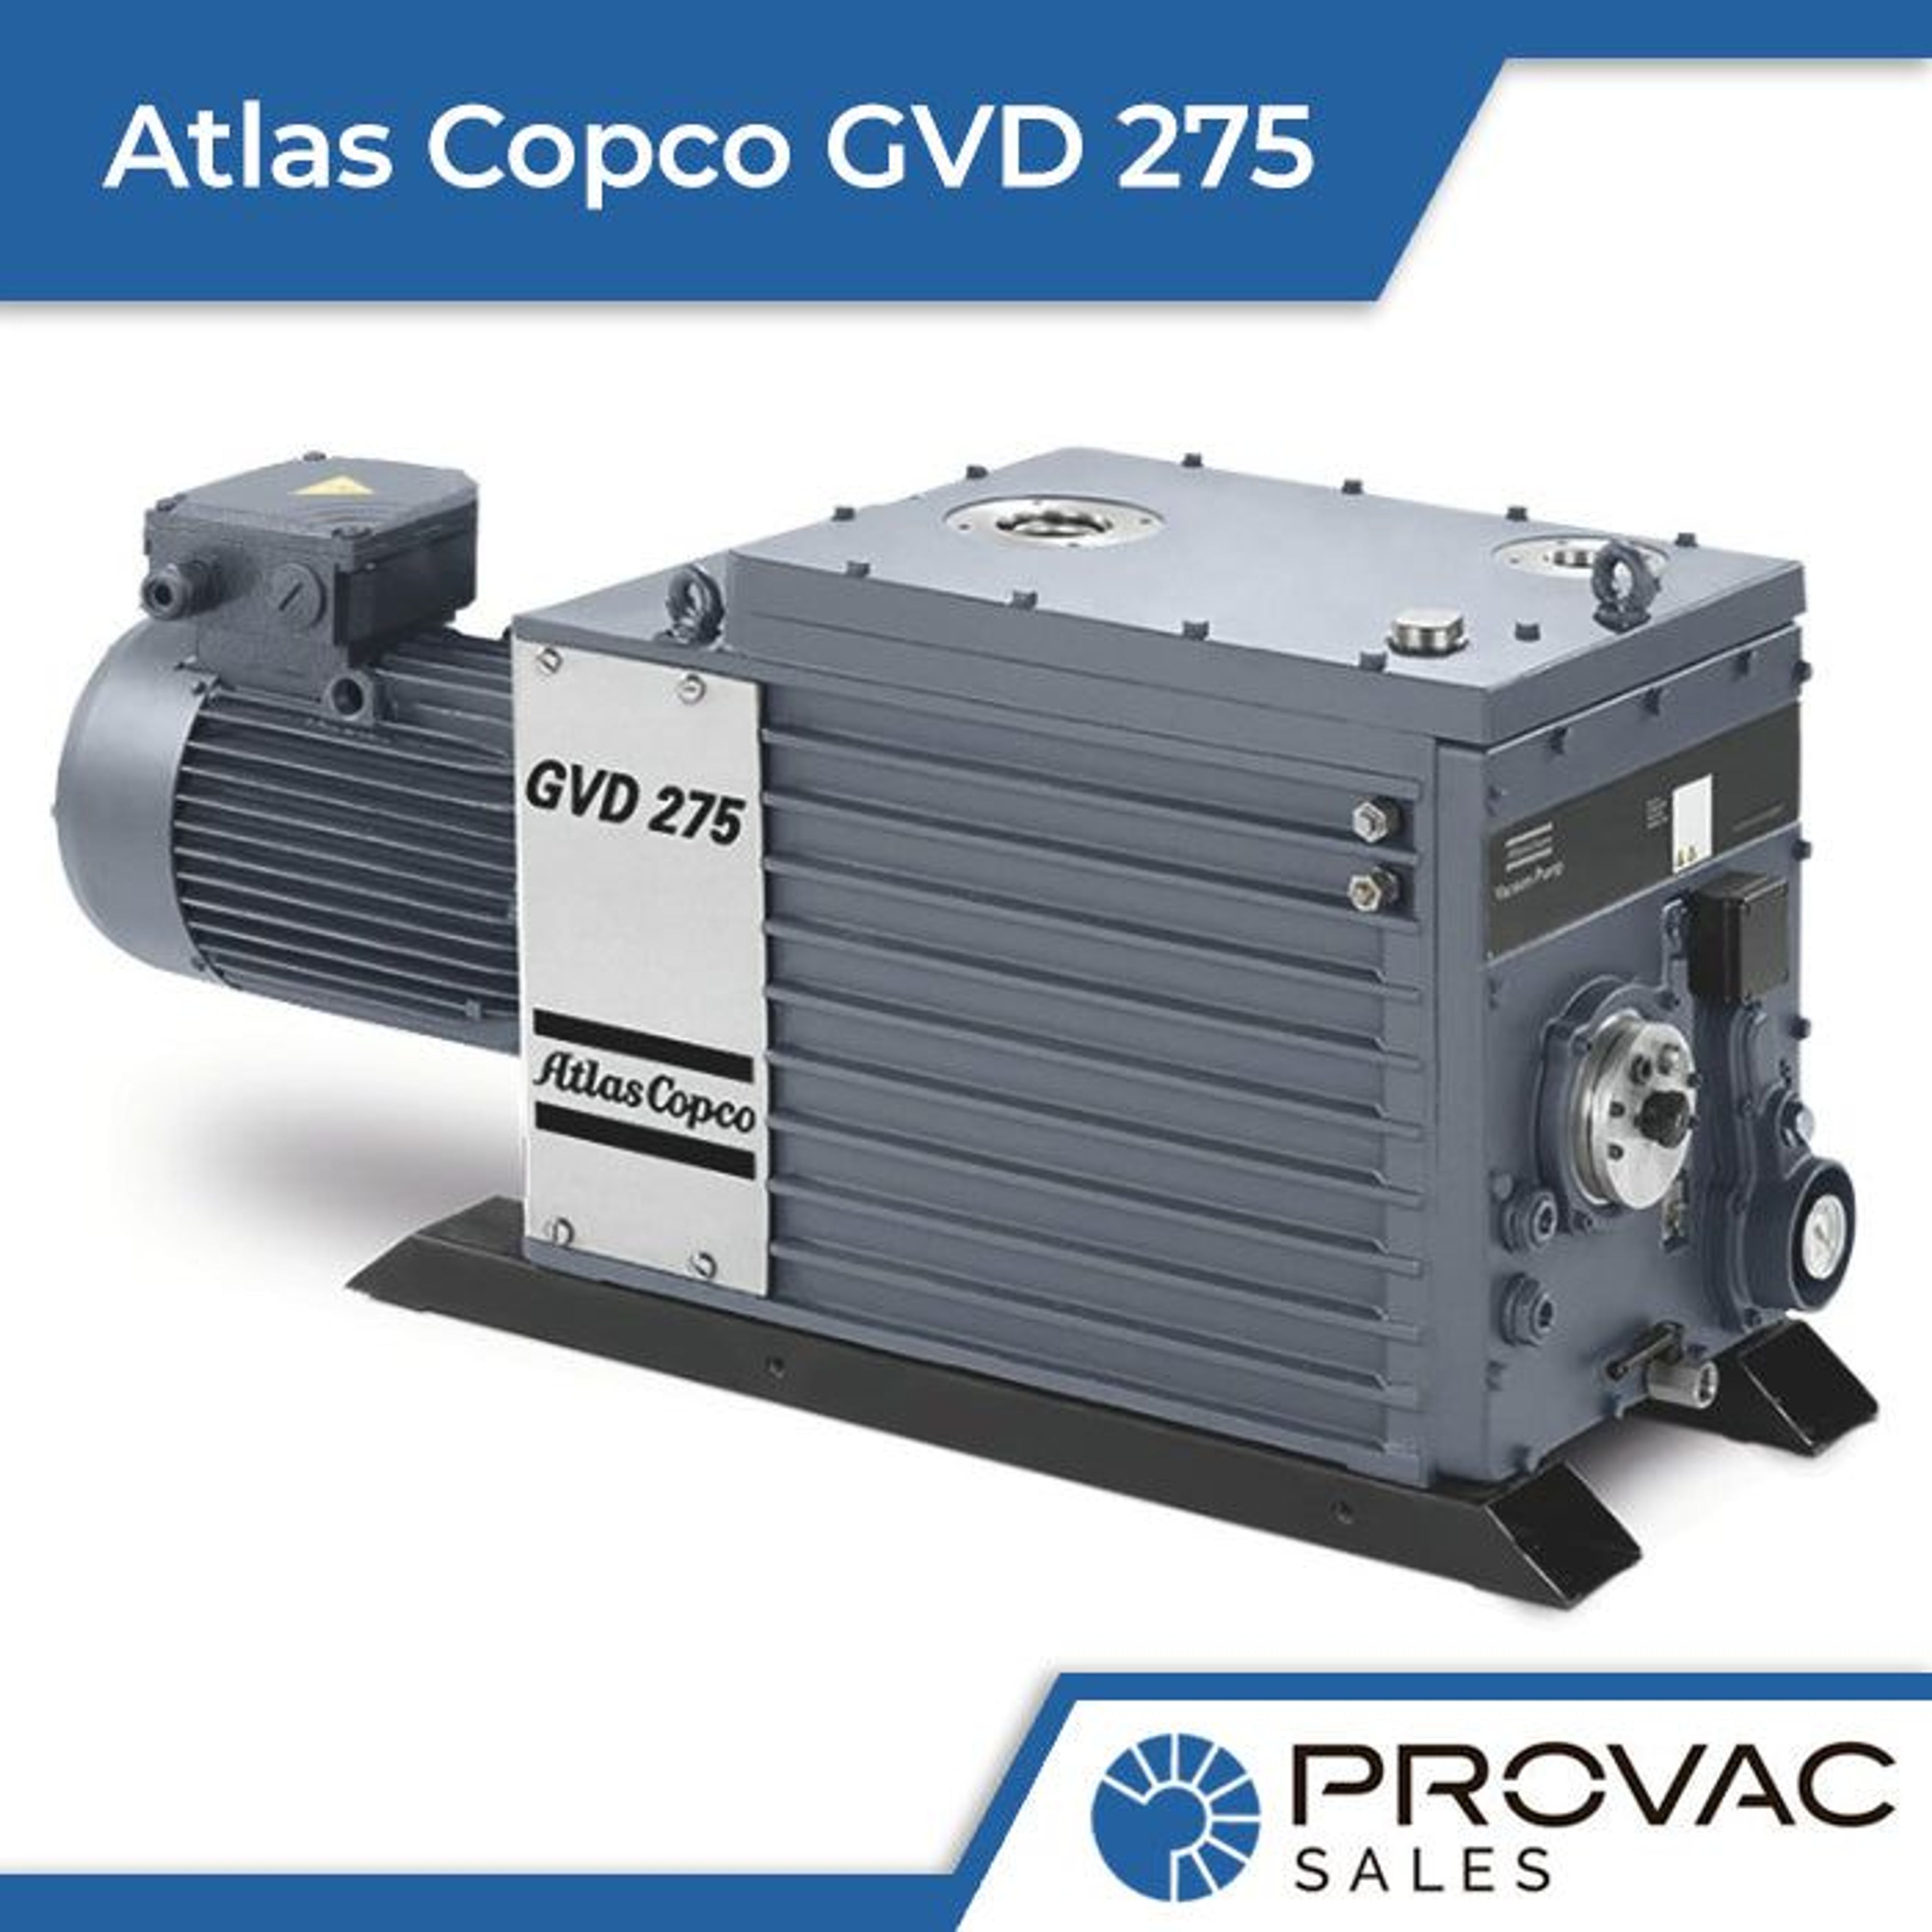 On Sale Now: Atlas Copco GVD 275 Rotary Vane Pump Background